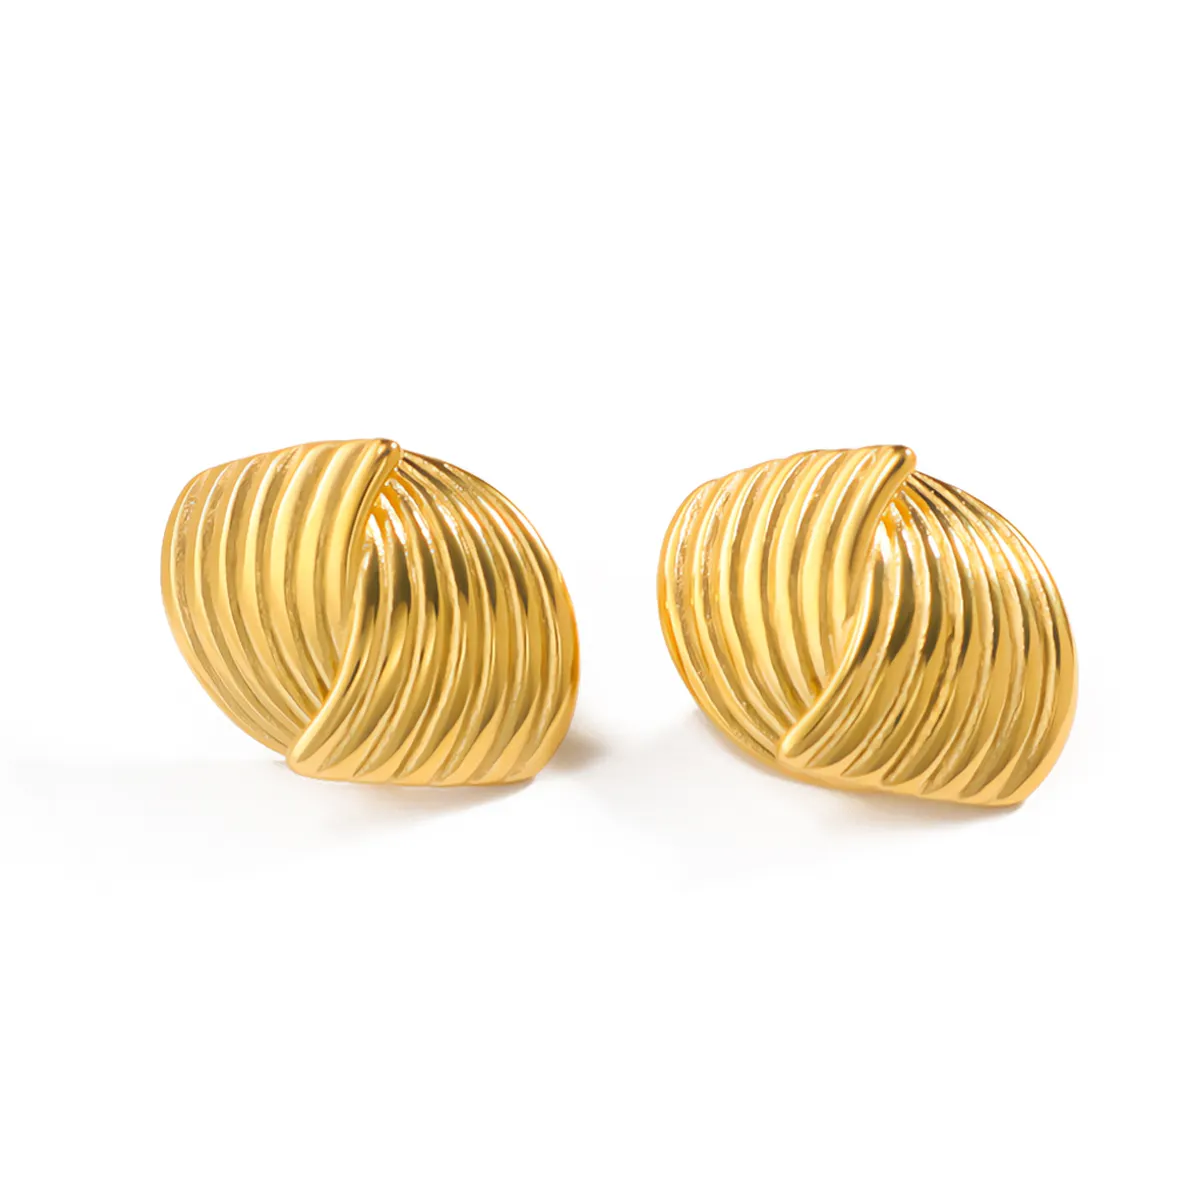 Waterproof Women Jewelry Instagram Popular 18K PVD Gold Plated Staggered Stripe Texture Cross CC Stainless Steel Earrings